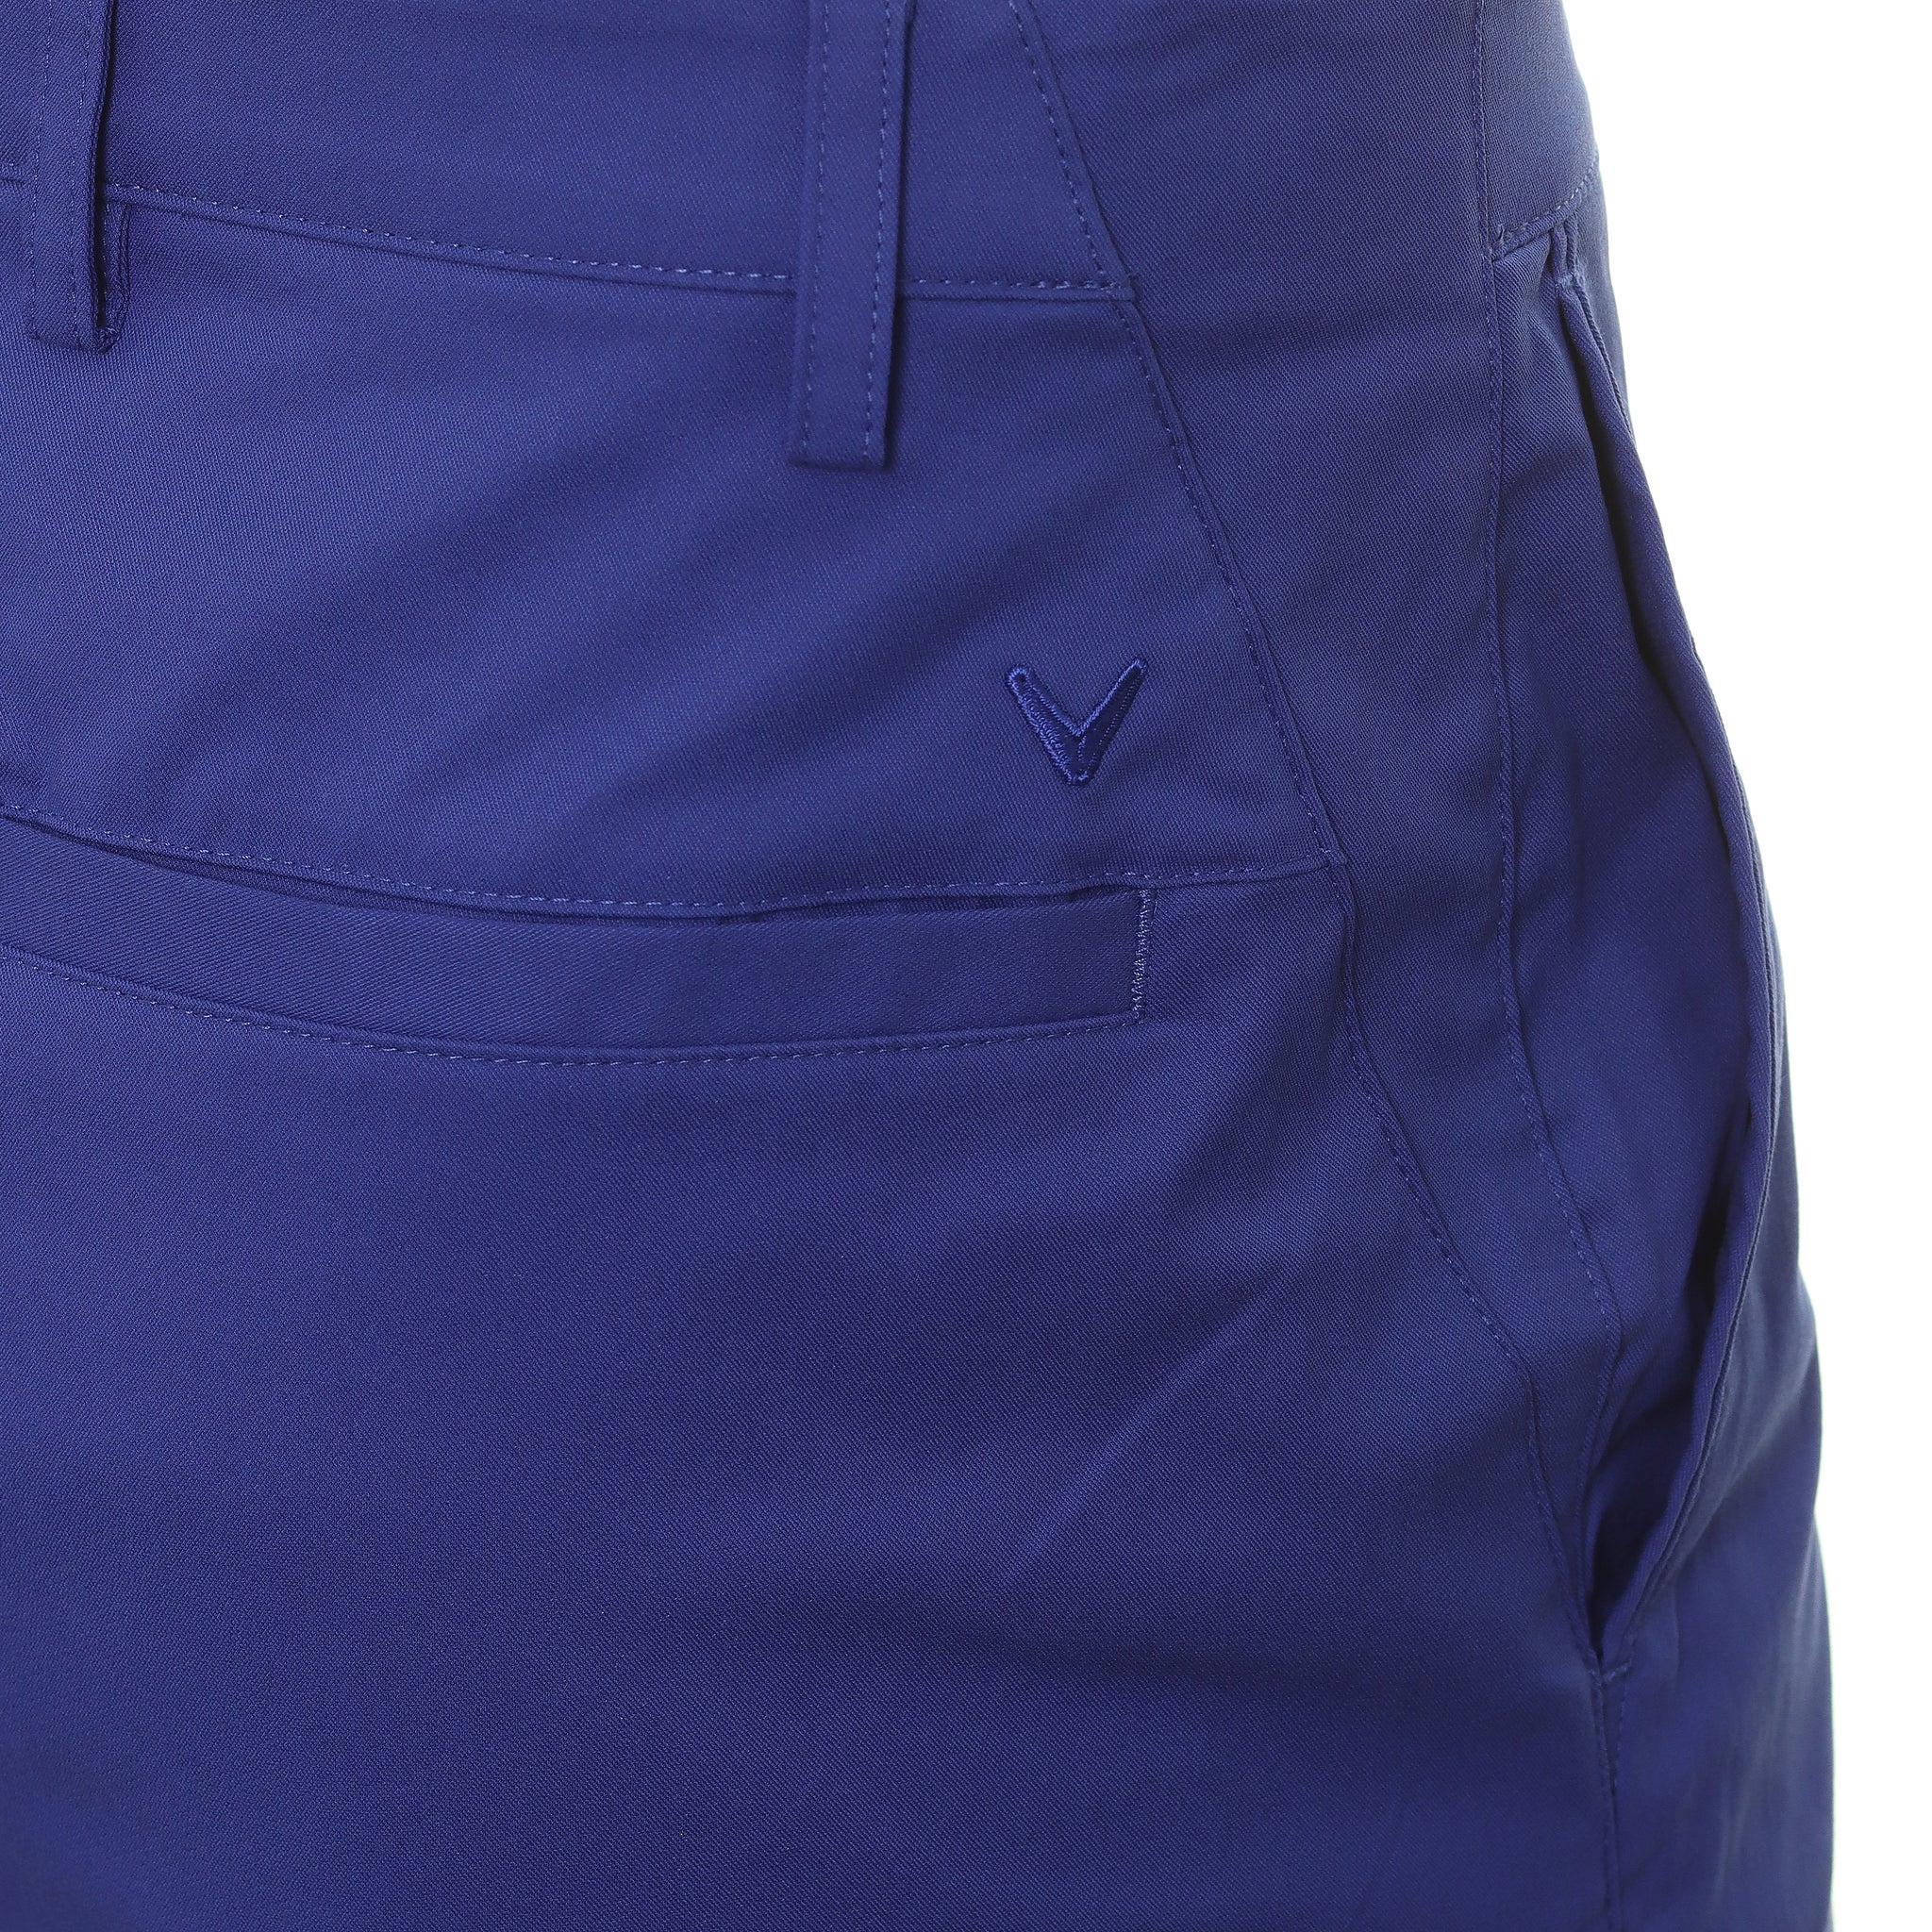 callaway-golf-x-series-flat-front-shorts-cgbsc053-clematis-blue-403